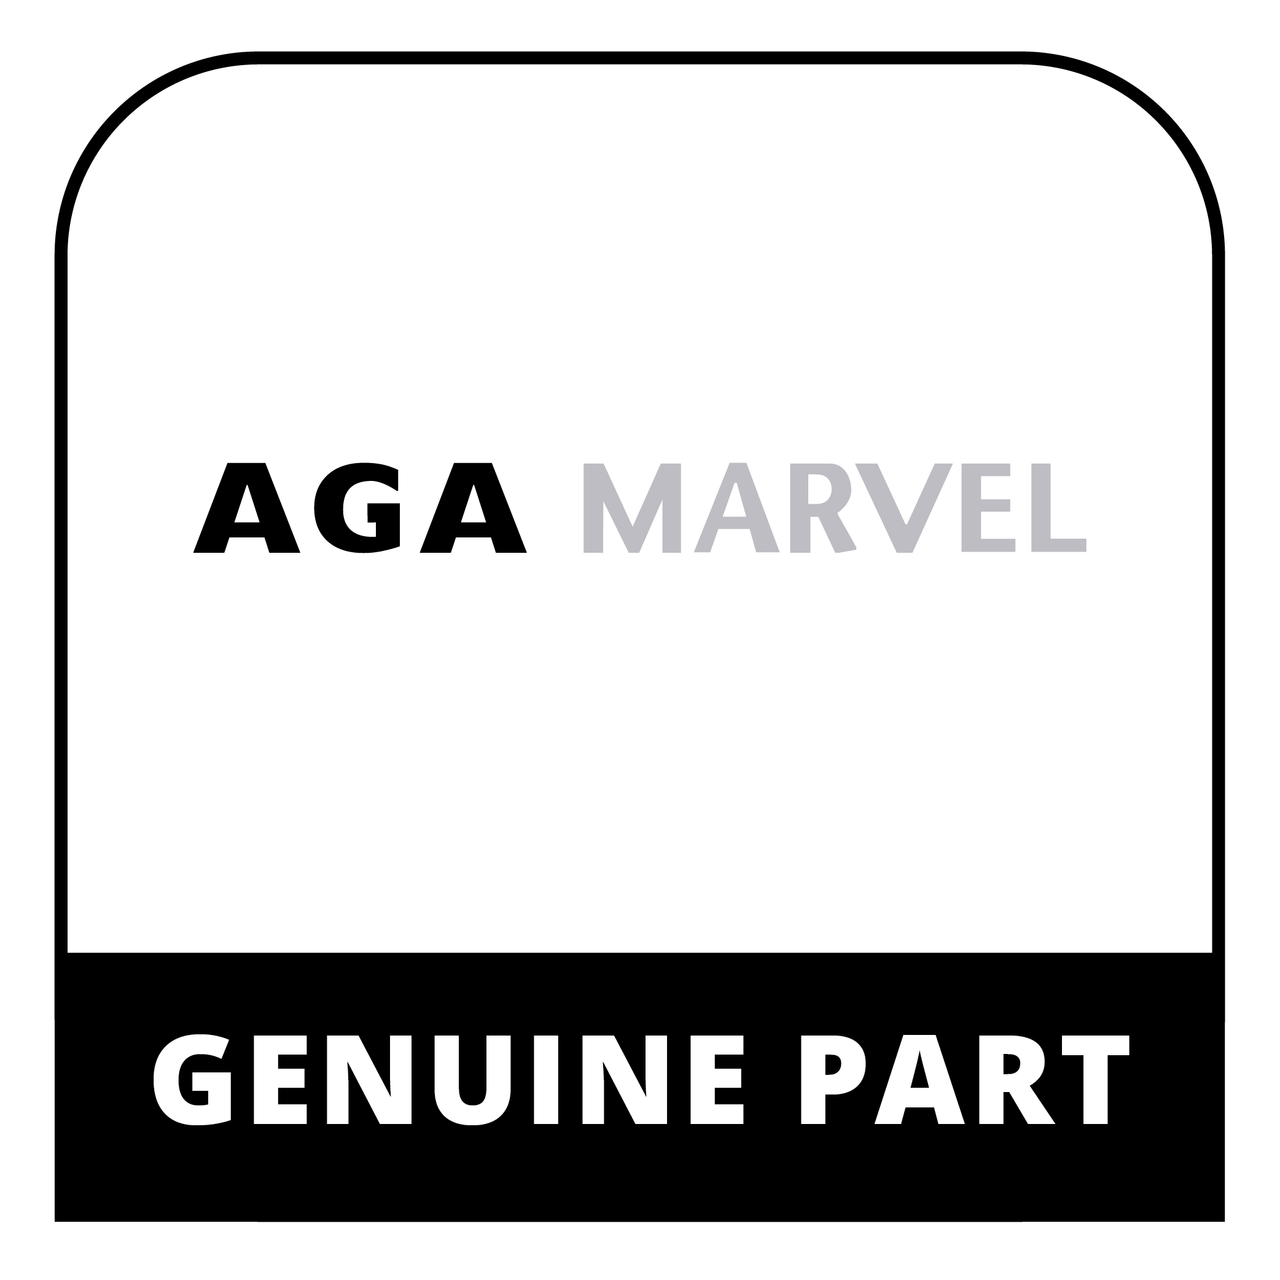 AGA Marvel R4968 - Reset Switch (C5559Atnad)230V - Genuine AGA Marvel Part